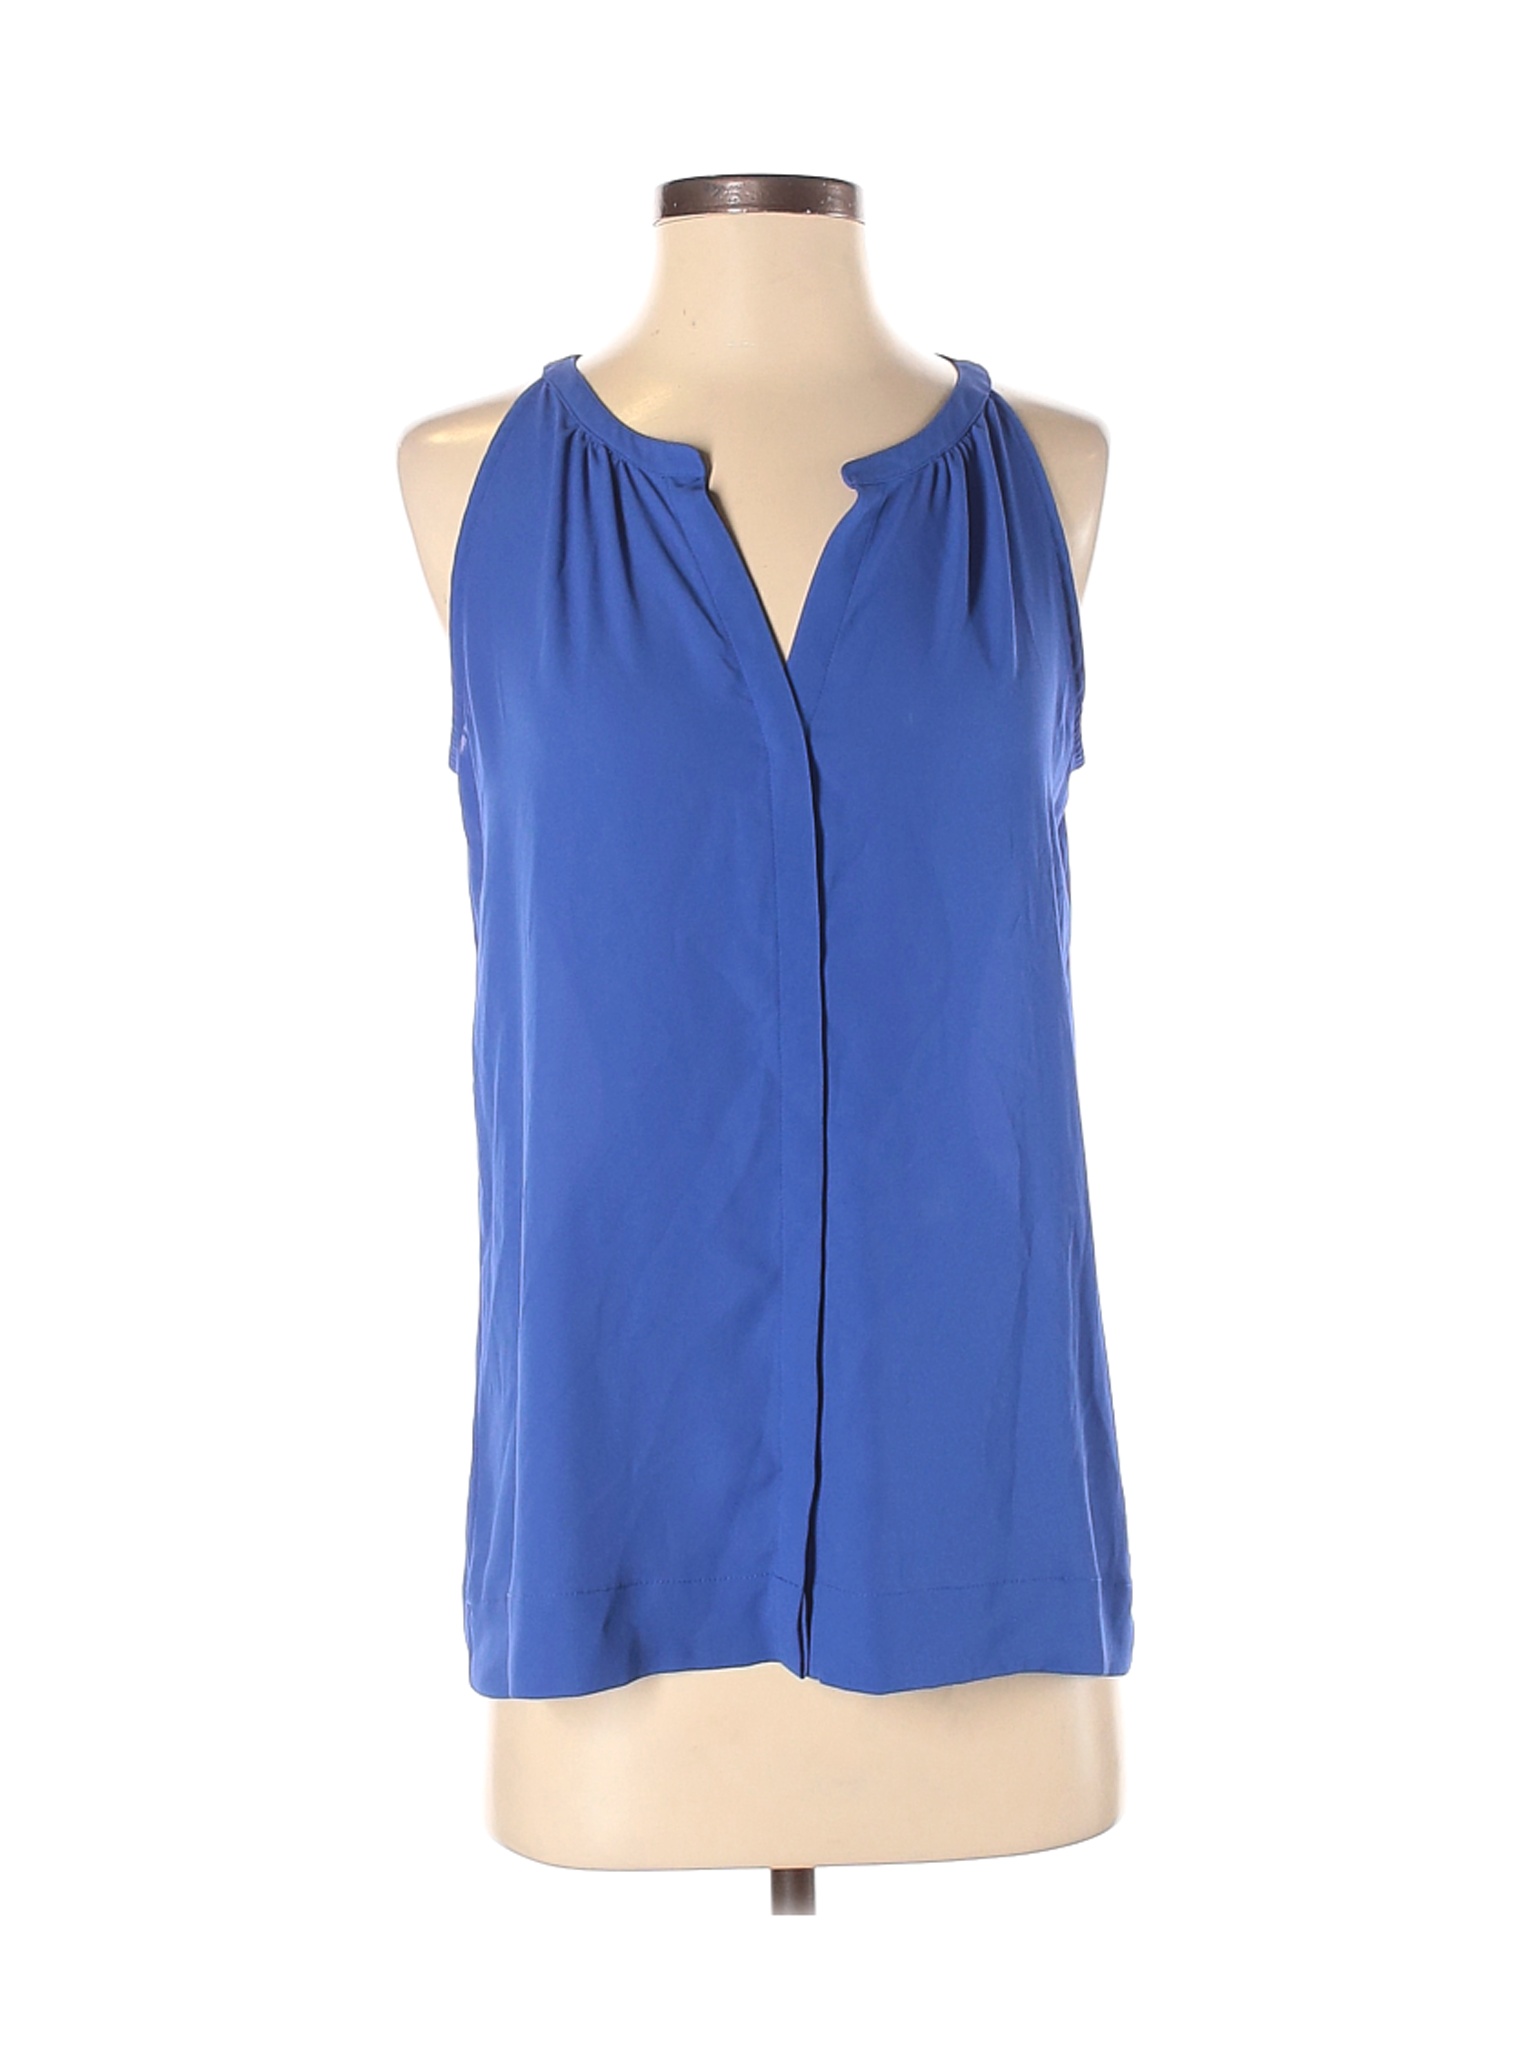 Ann Taylor LOFT Women Blue Sleeveless Blouse S | eBay